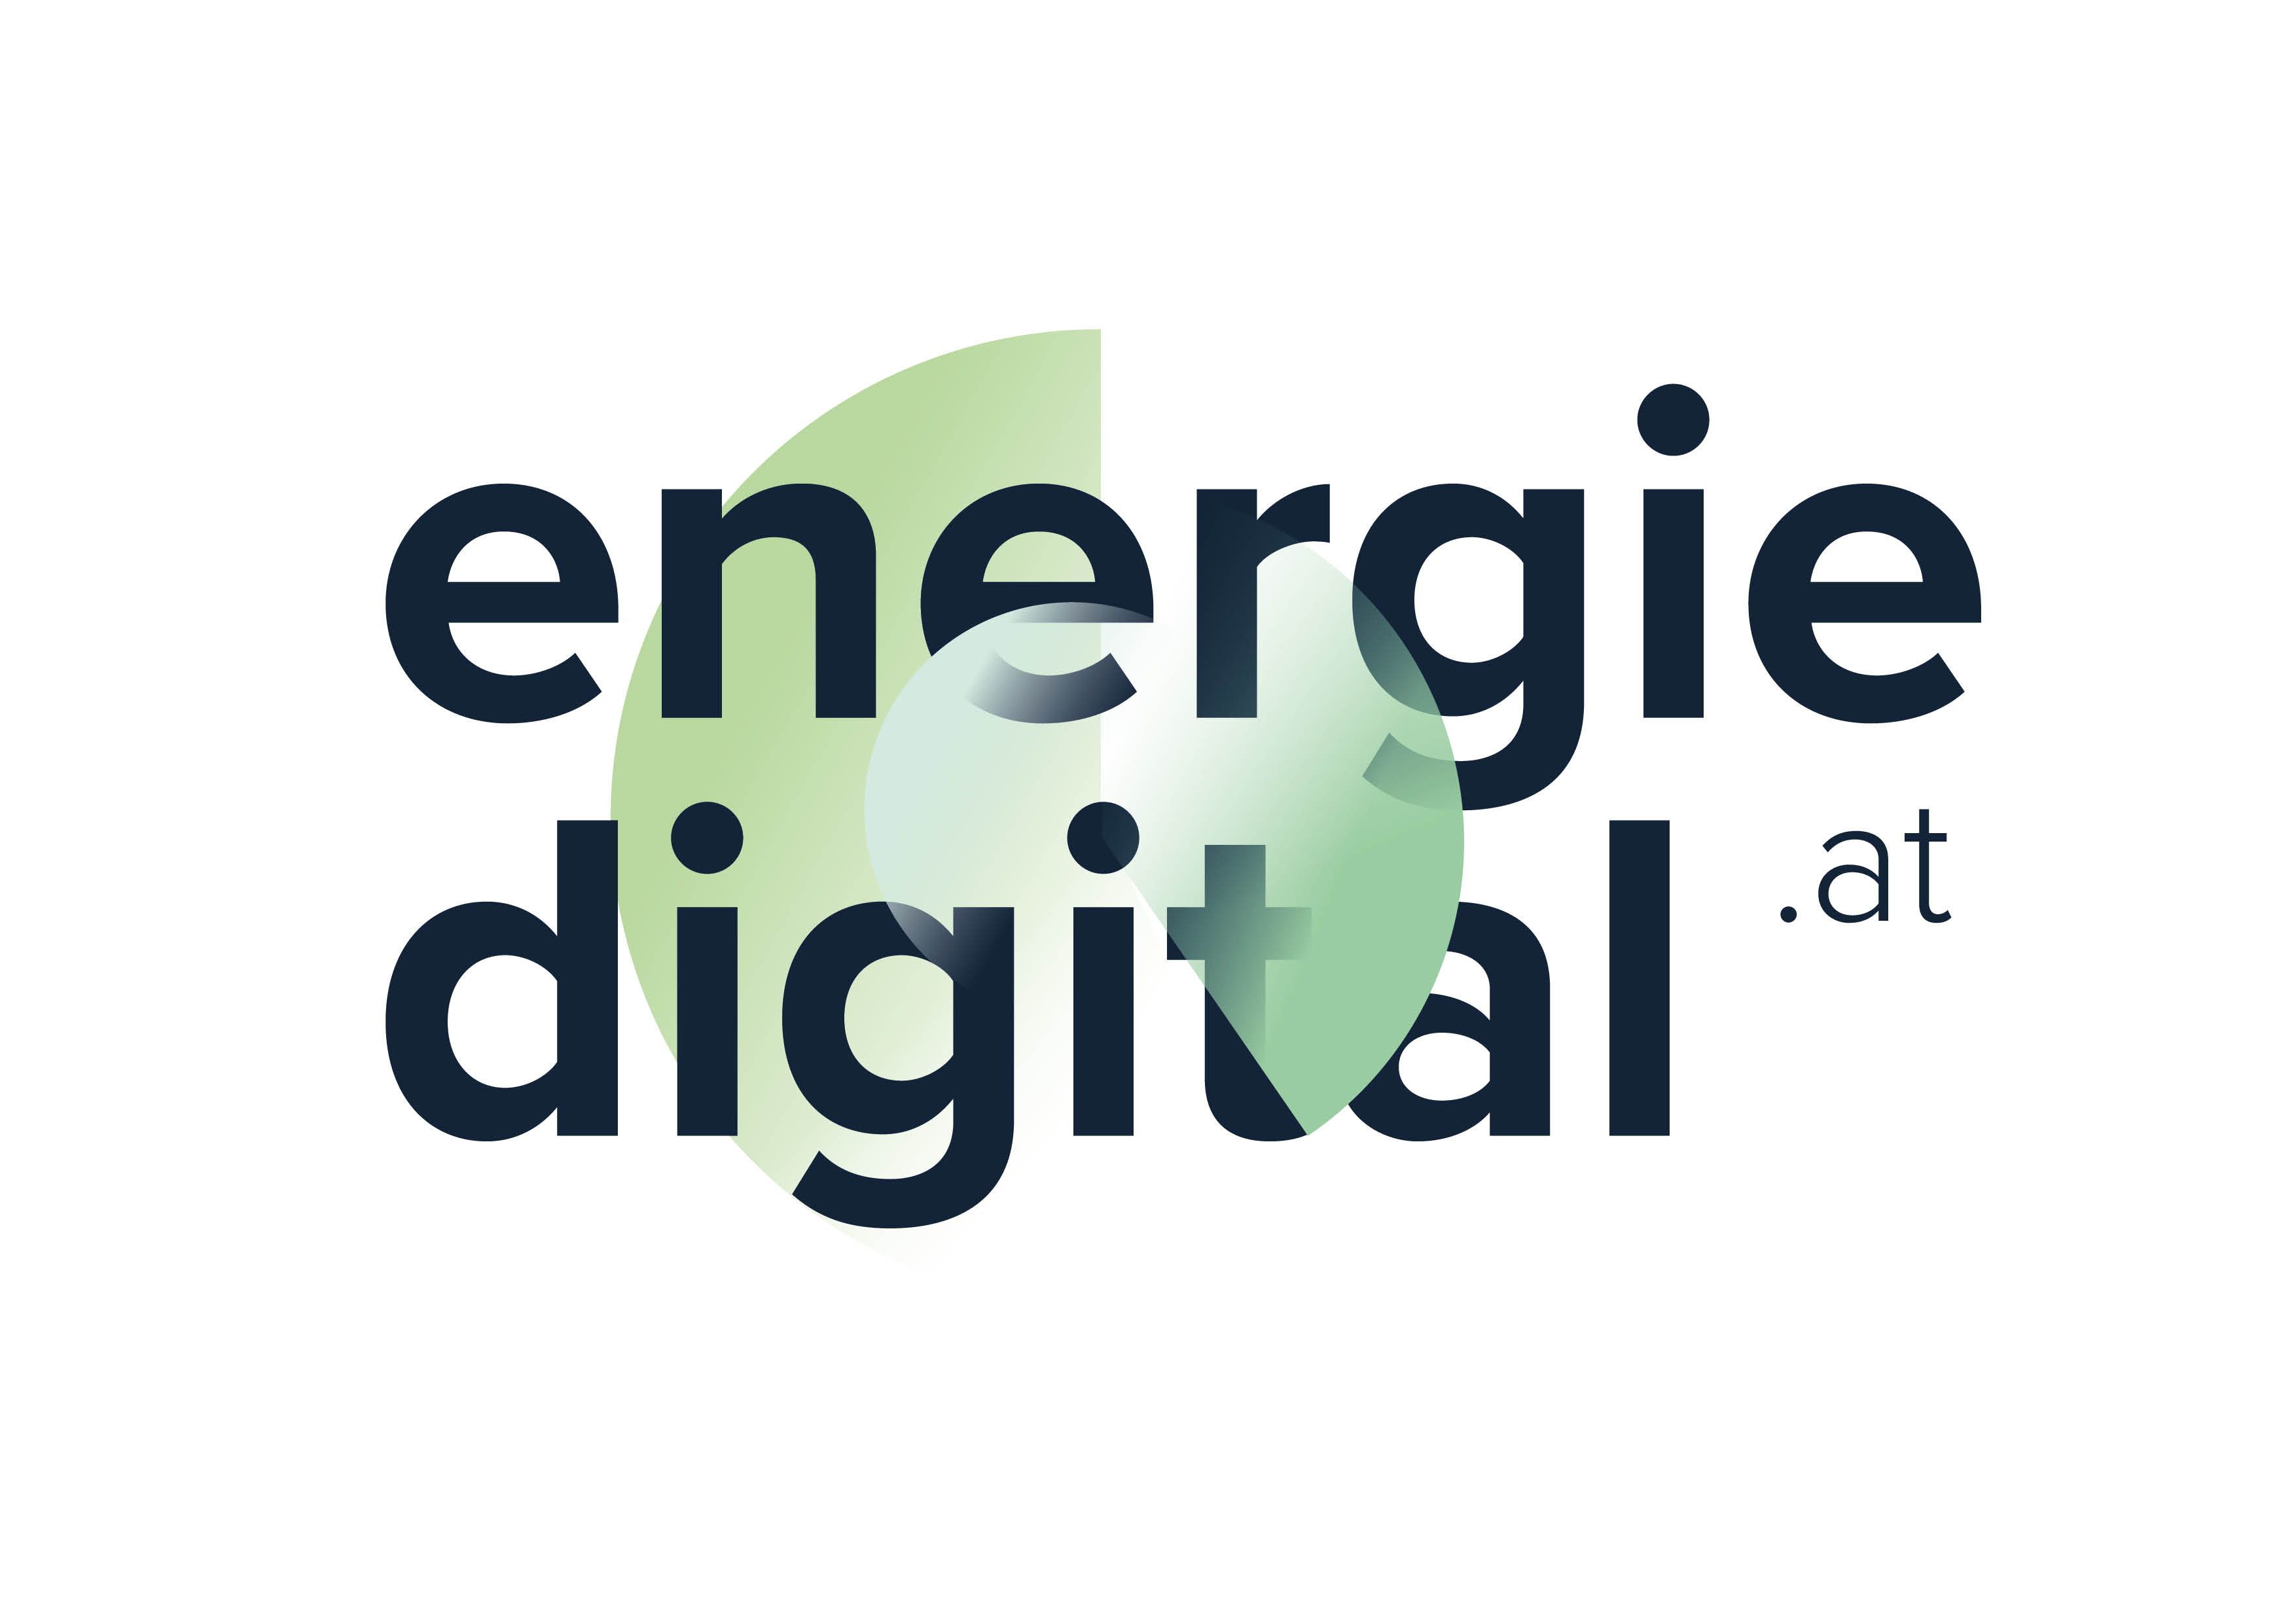 (c) Energiedigital.at